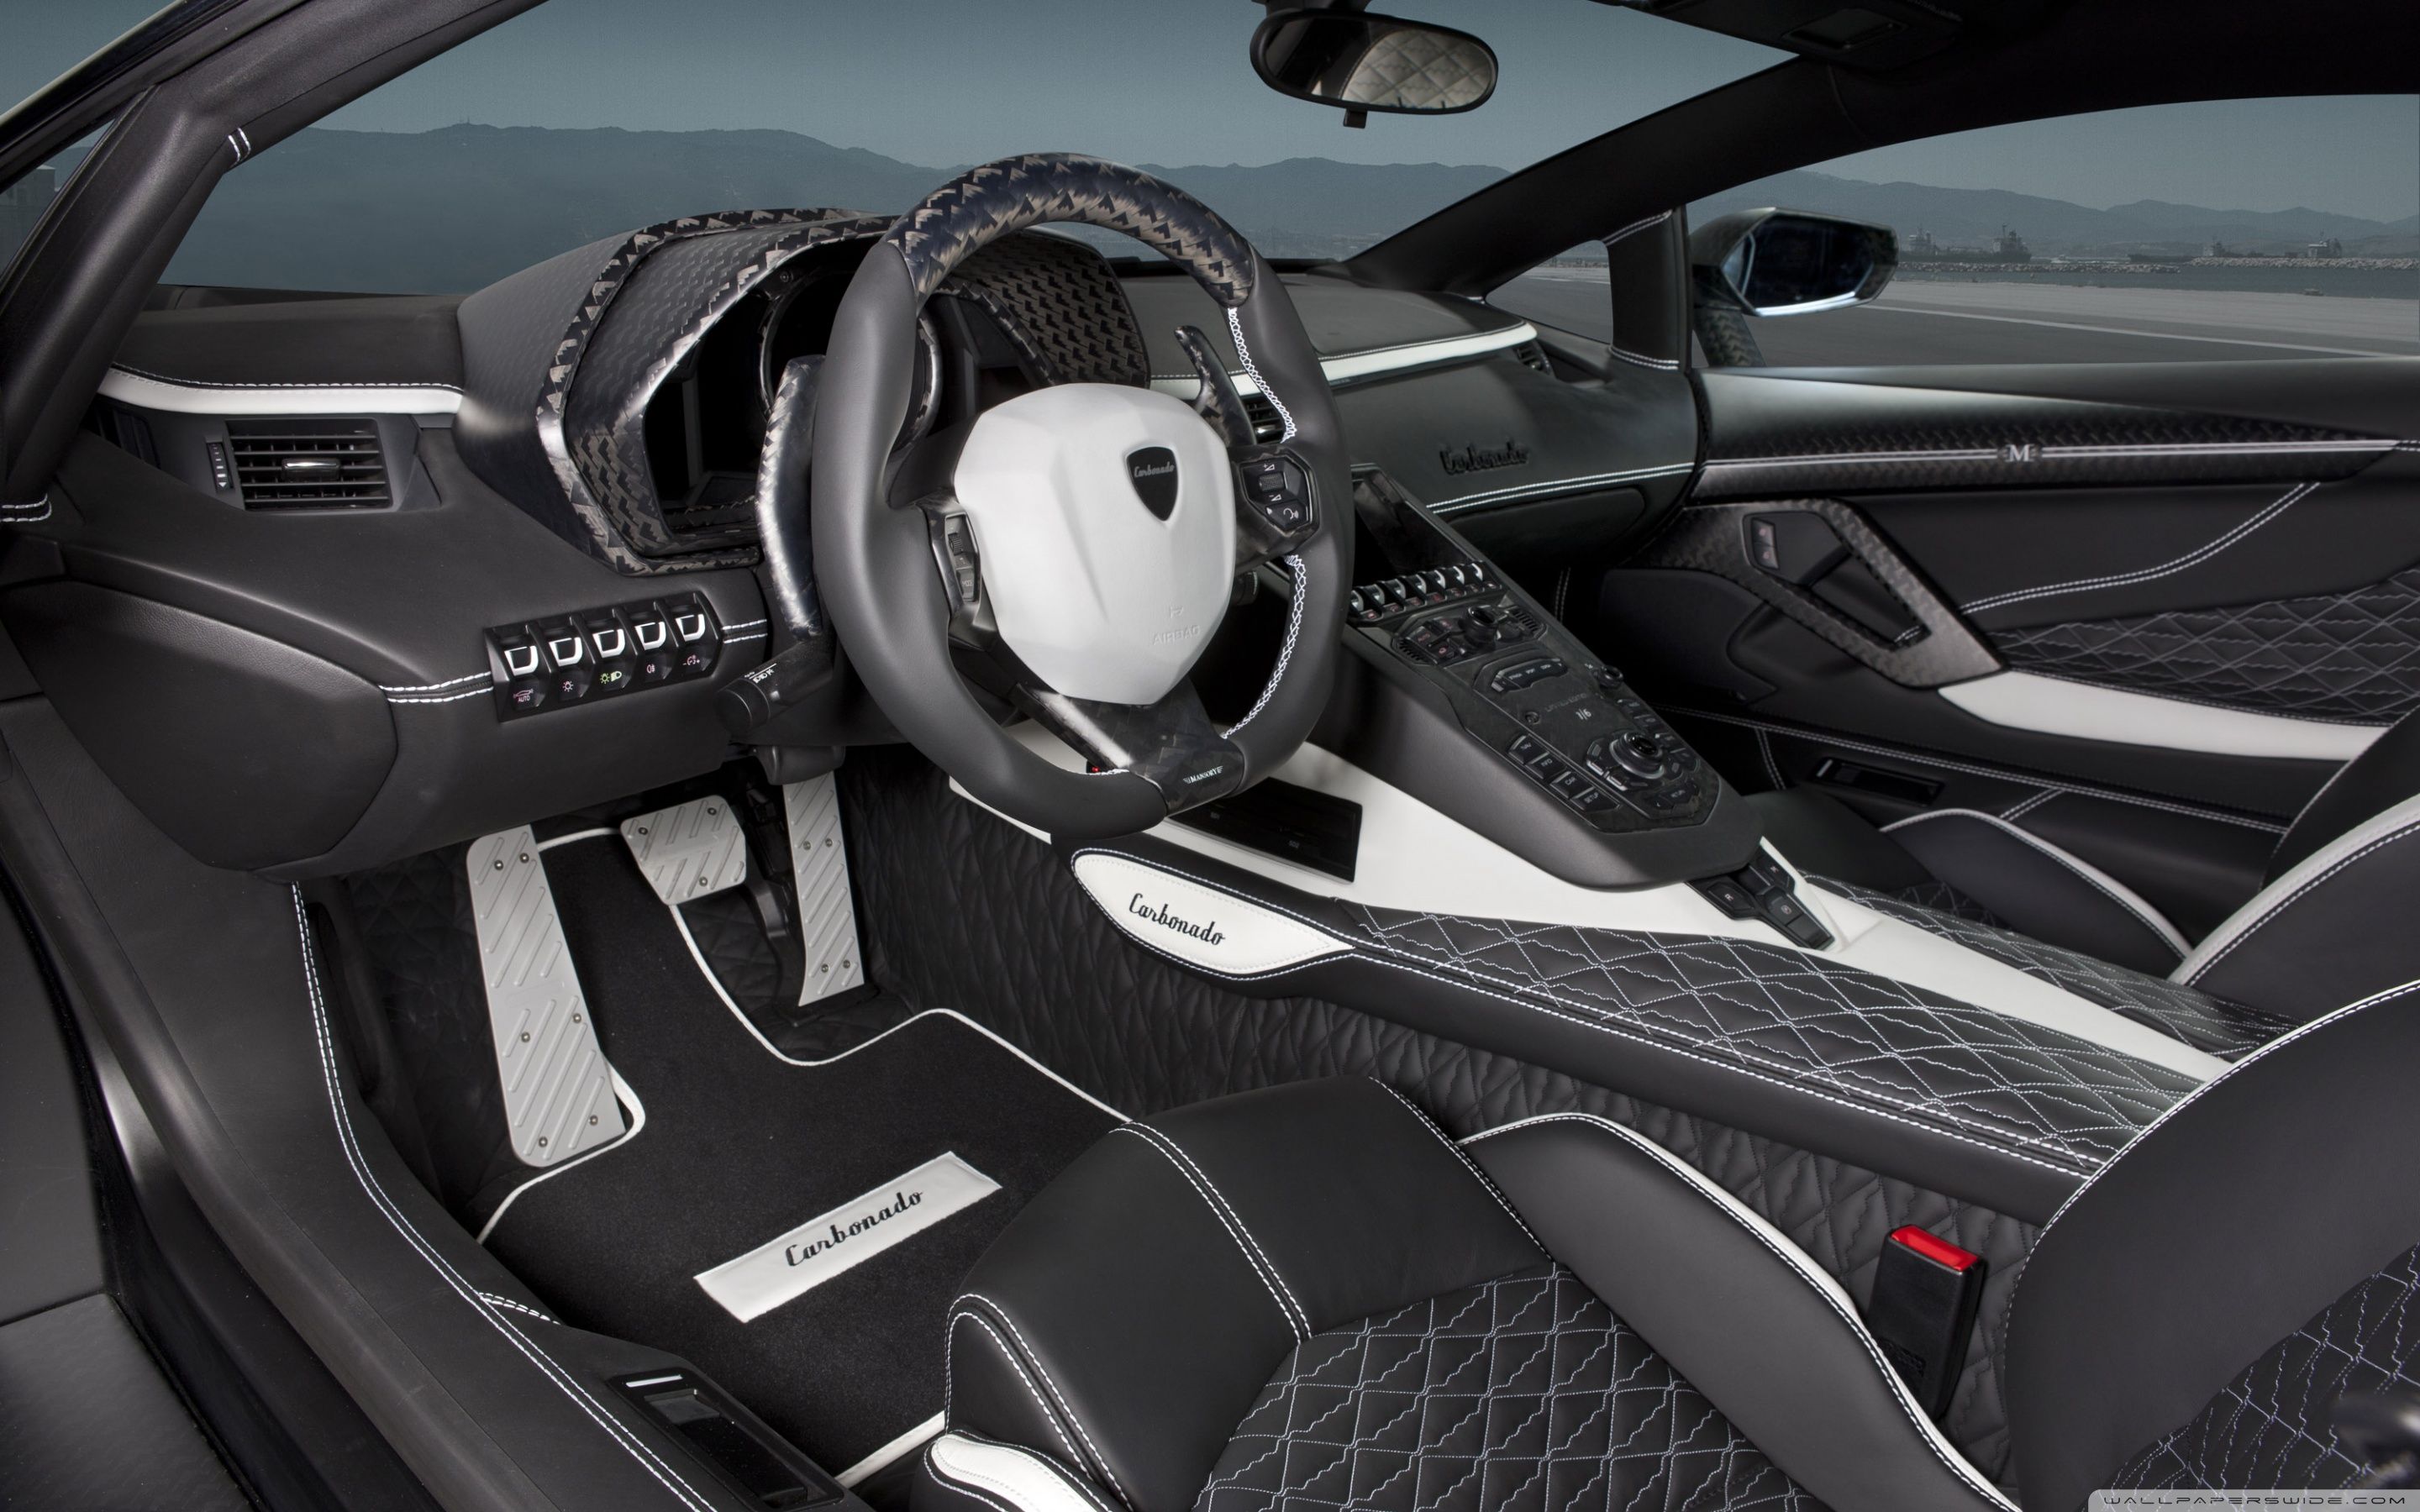 Lamborghini Aventador LP700 4 Car Interior Ultra HD Desktop Background Wallpaper for 4K UHD TV, Widescreen & UltraWide Desktop & Laptop